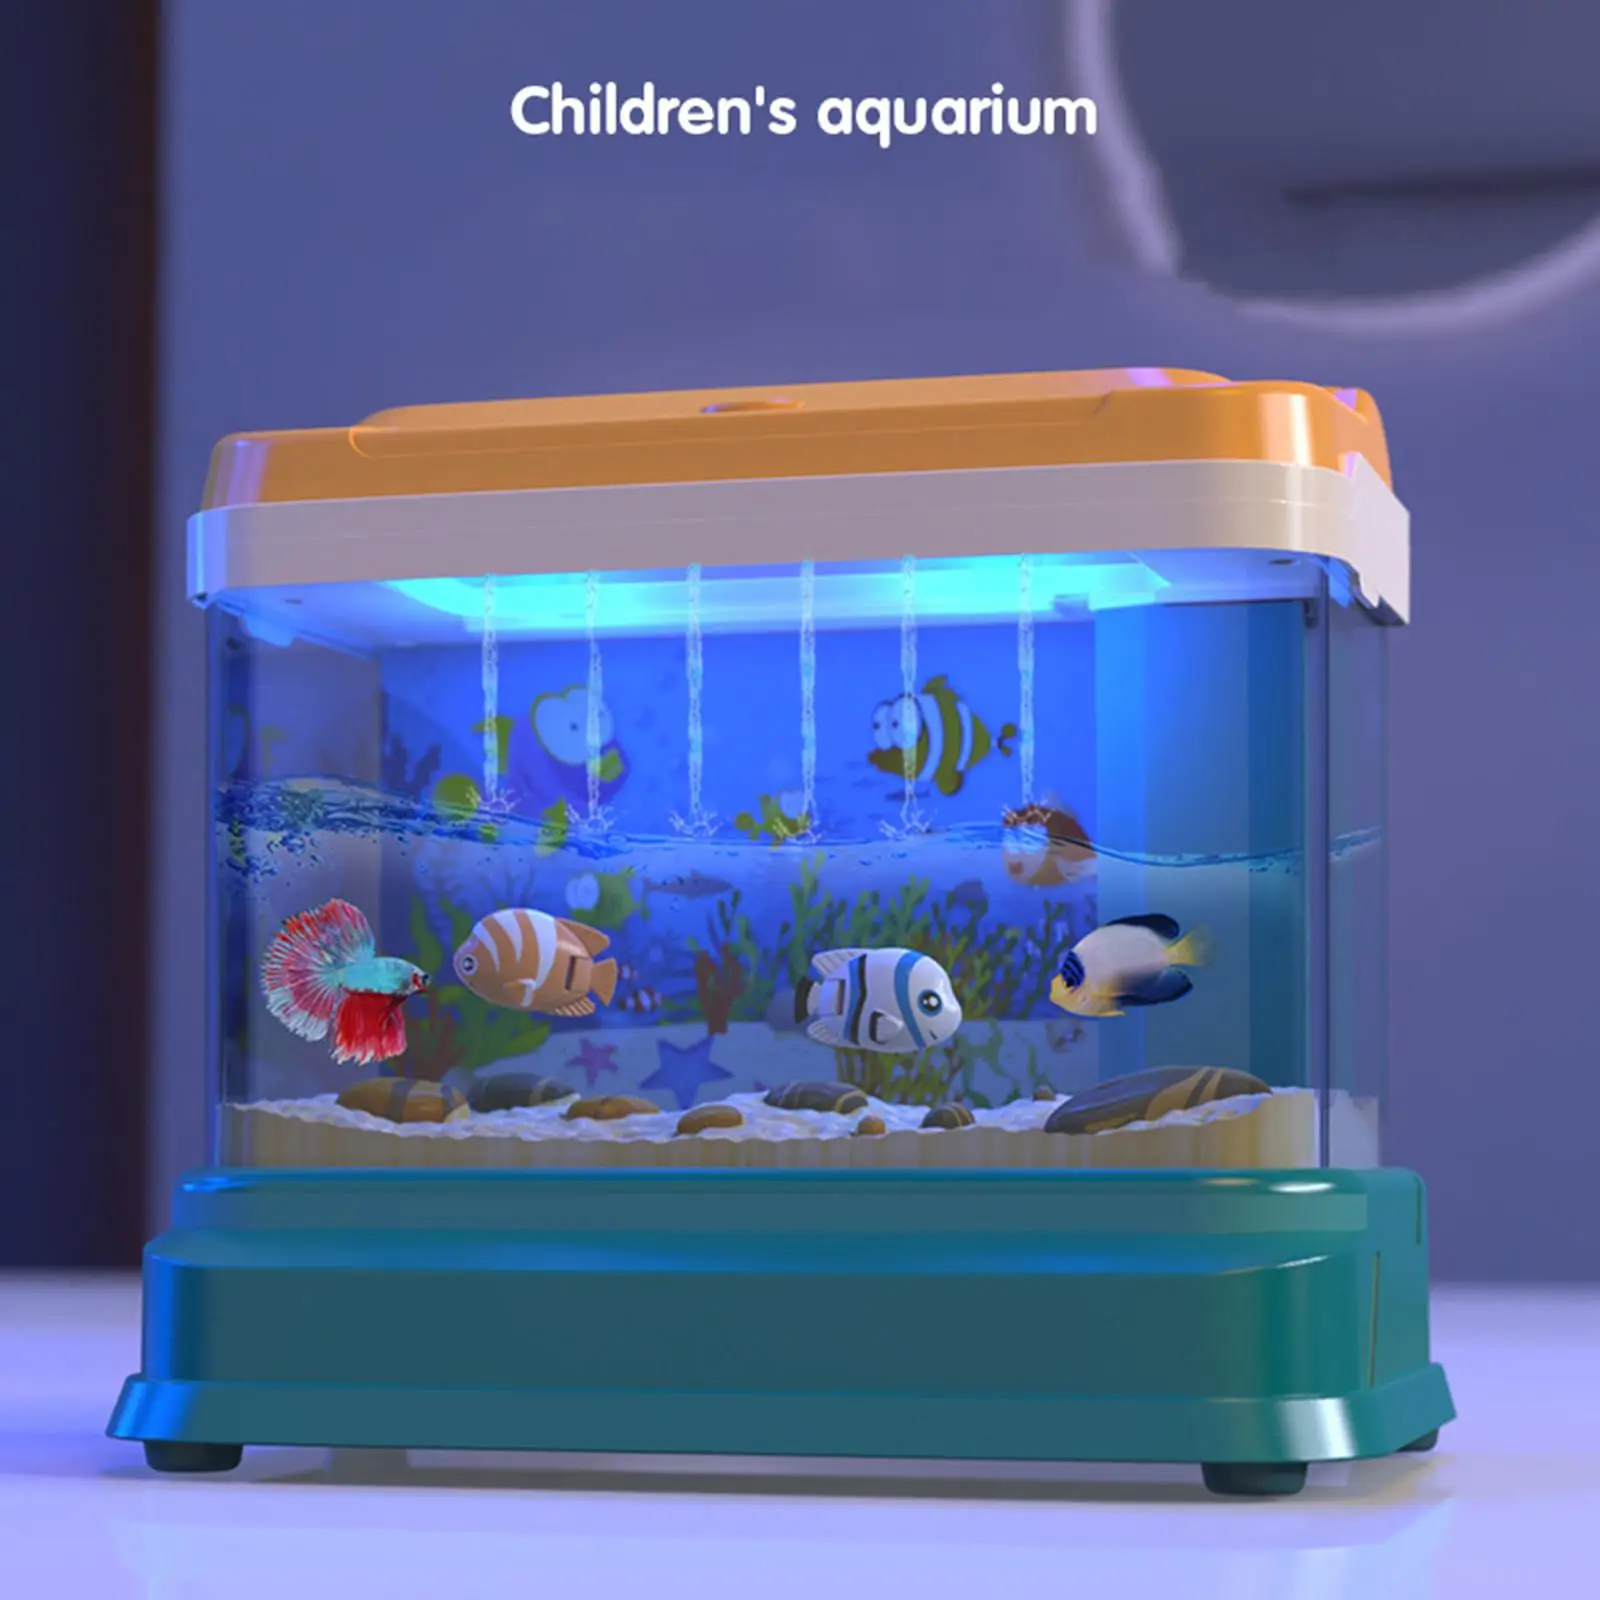 Simulation Electric Fish Tank Fine Motor Skill Training and Music Fishing Rod Small Aquarium for Kids